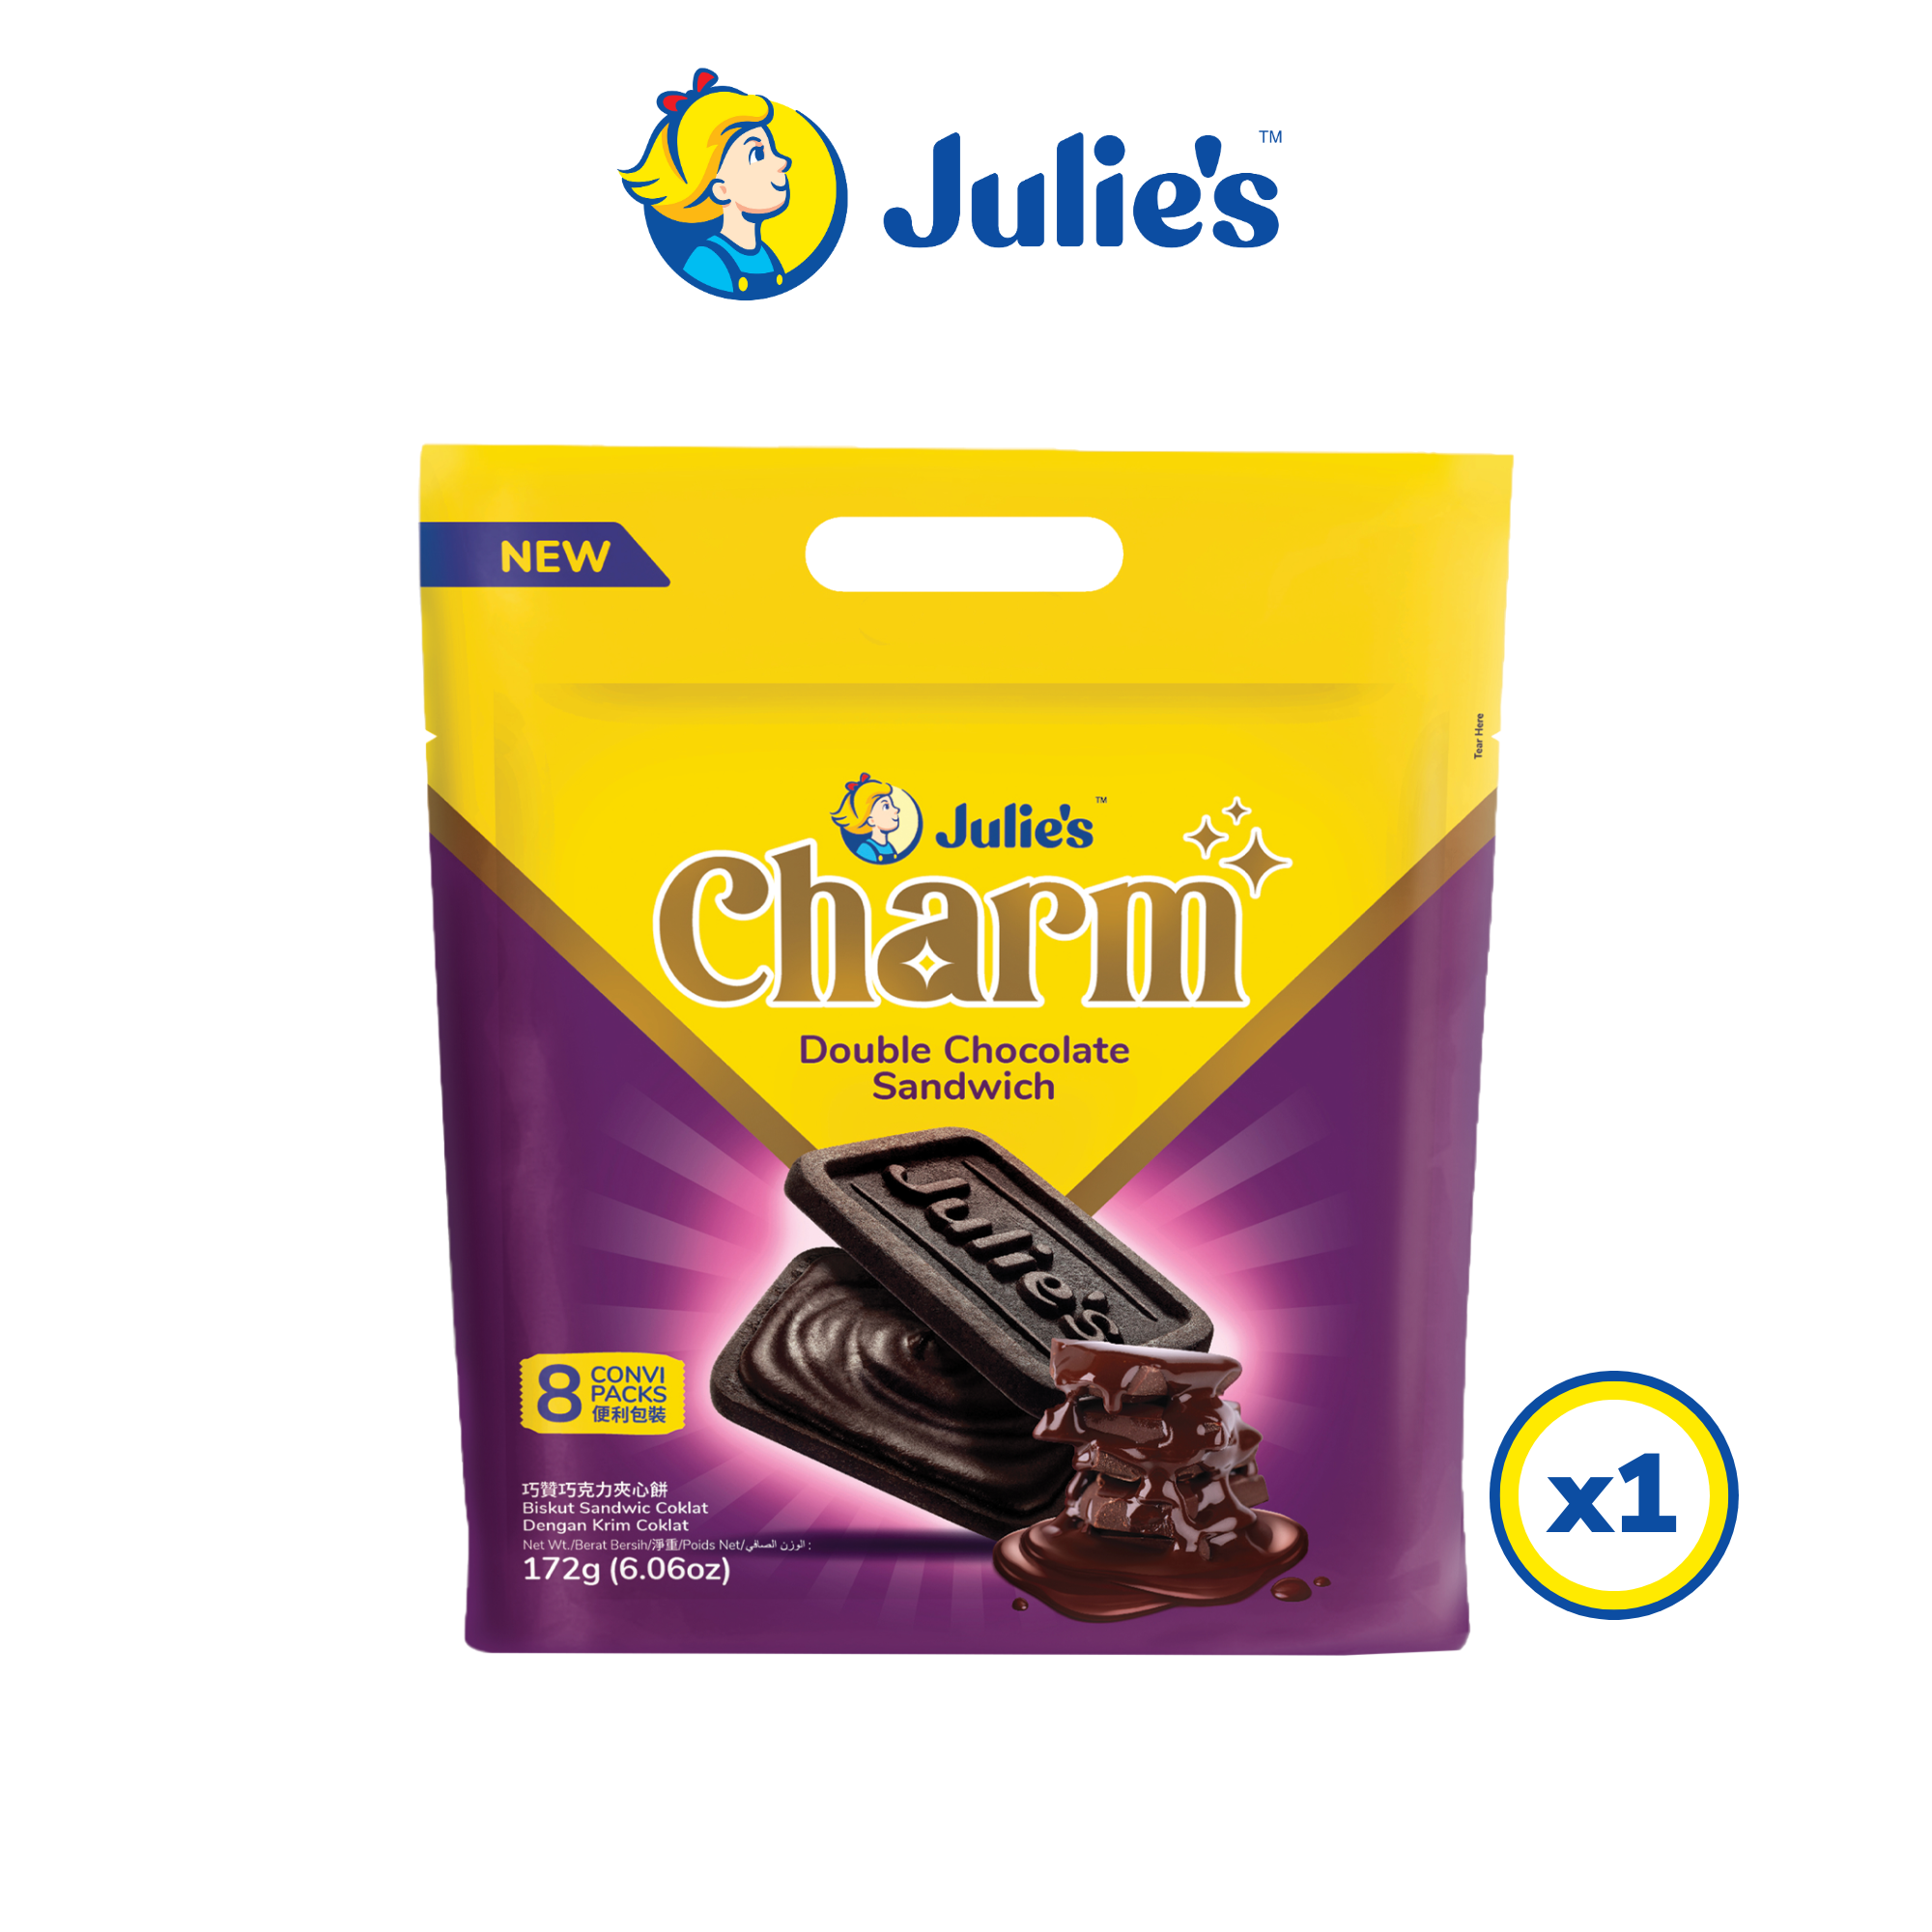 Julie’s Charm Double Chocolate Sandwich 172g x 1 pack